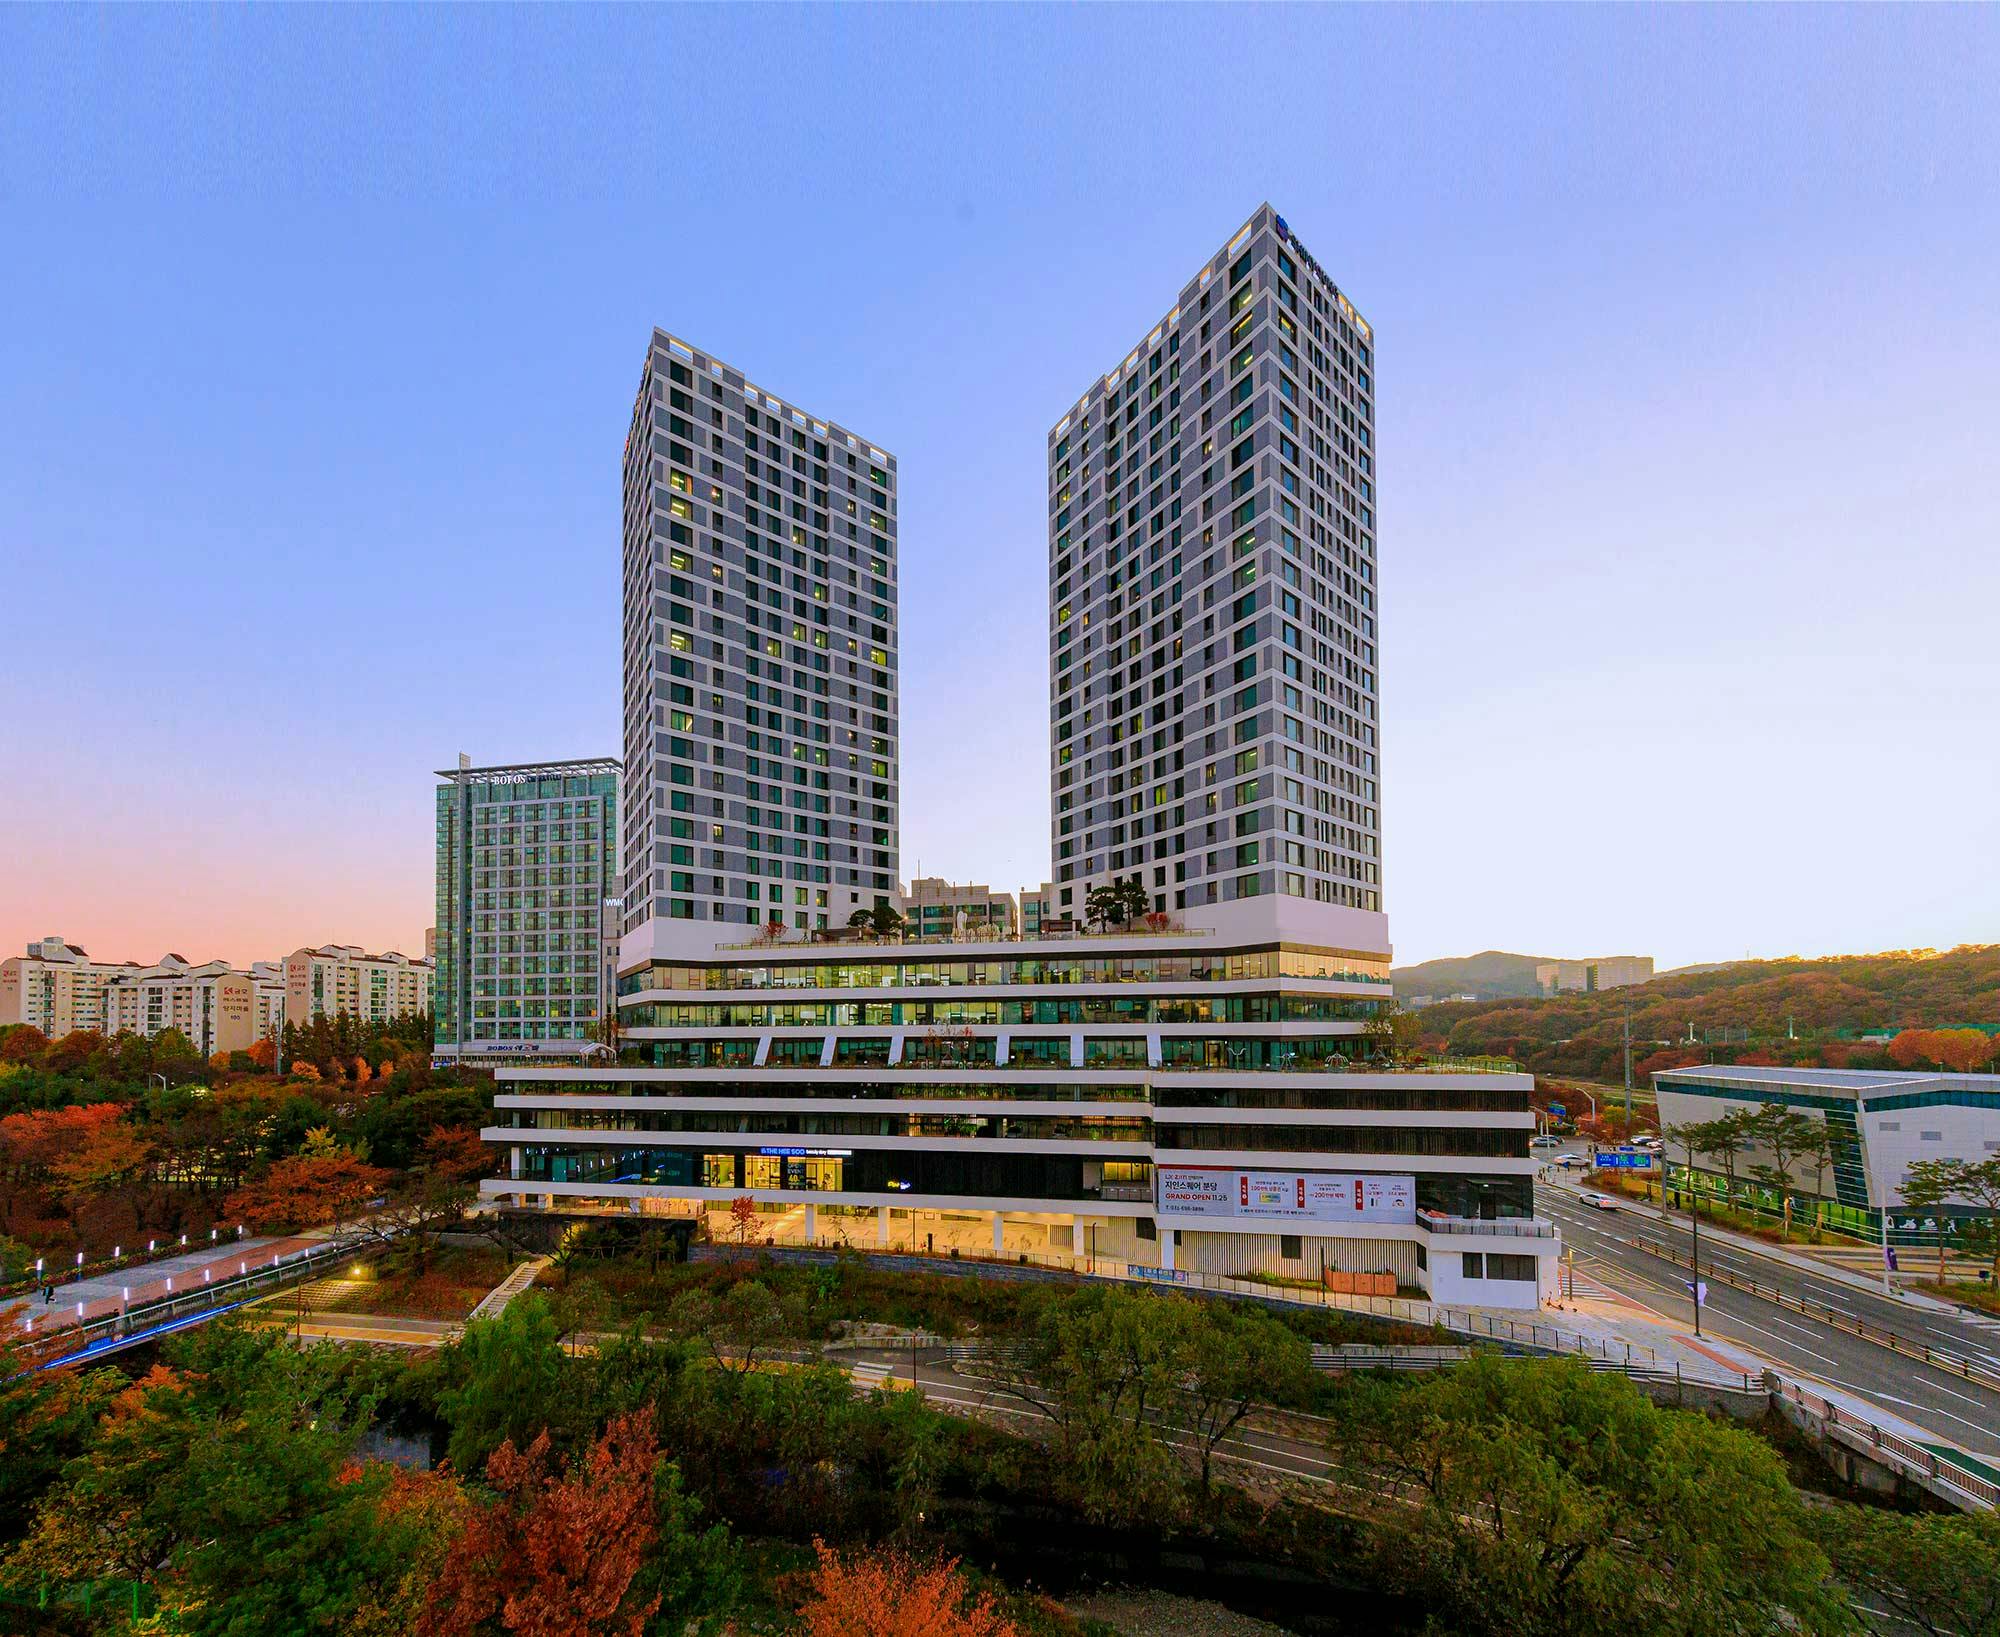 Numéro d'image 33 de la section actuelle de Korea: Ode to contemporary architecture amidst Sakura blossoms thanks to Dekton de Cosentino France